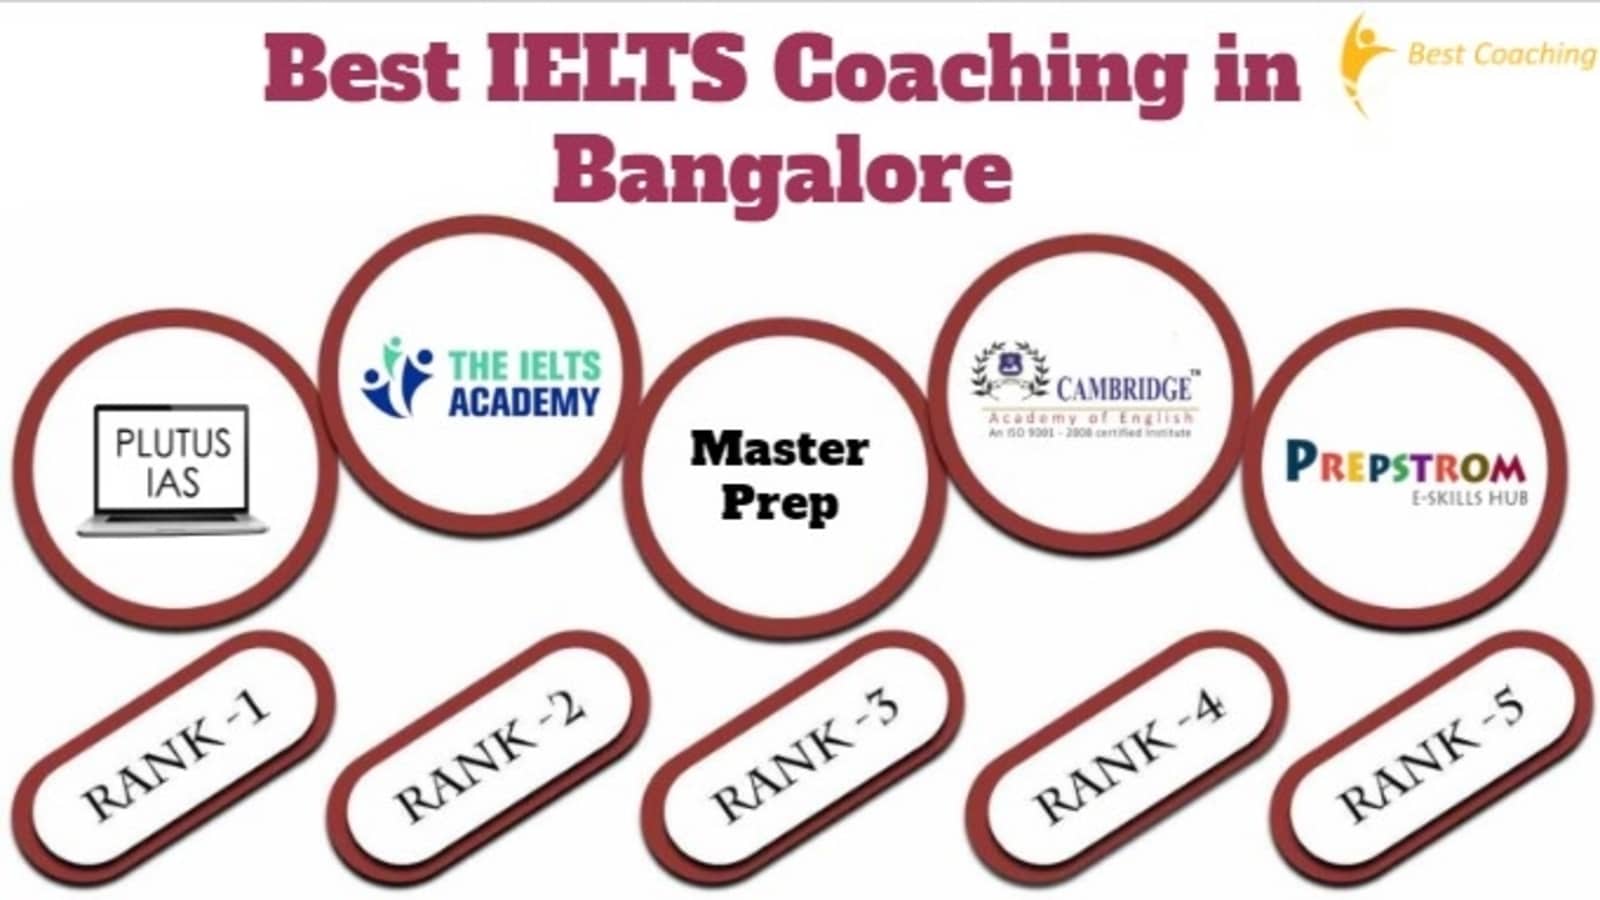 Best IELTS Coaching in Bangalore